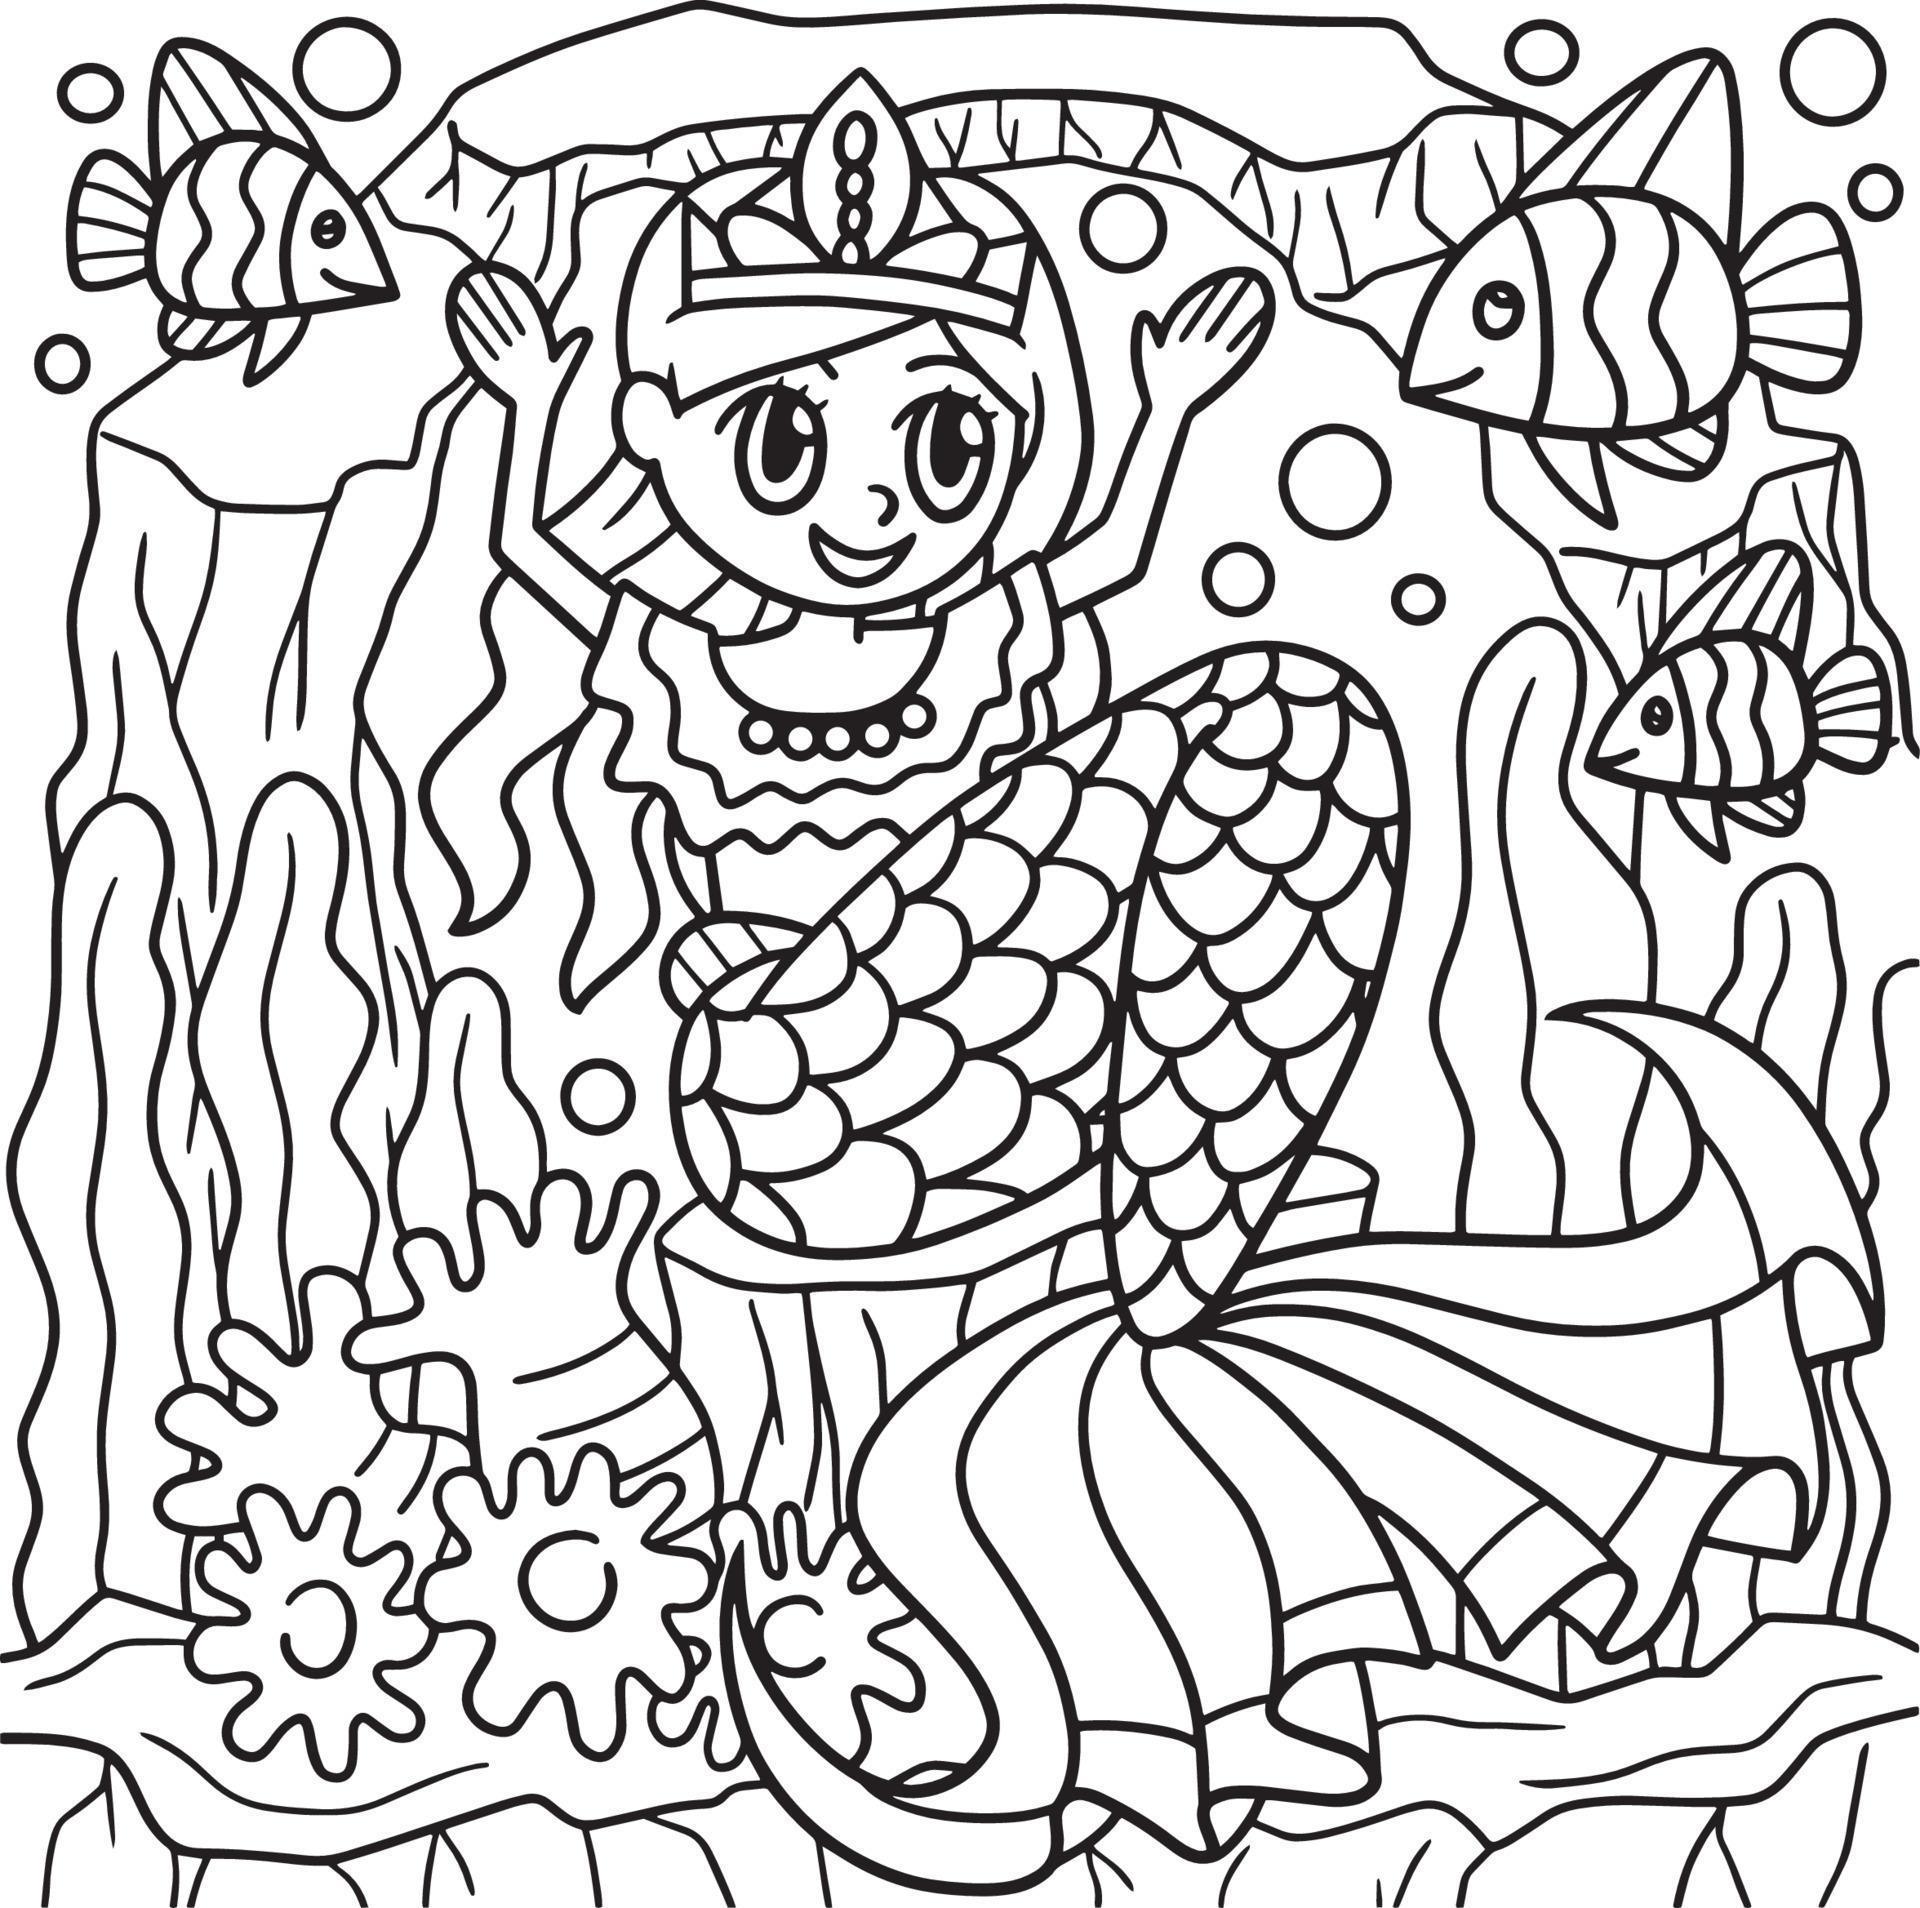 mermaid-crown-princess-coloring-page-for-kids-7819197-vector-art-at